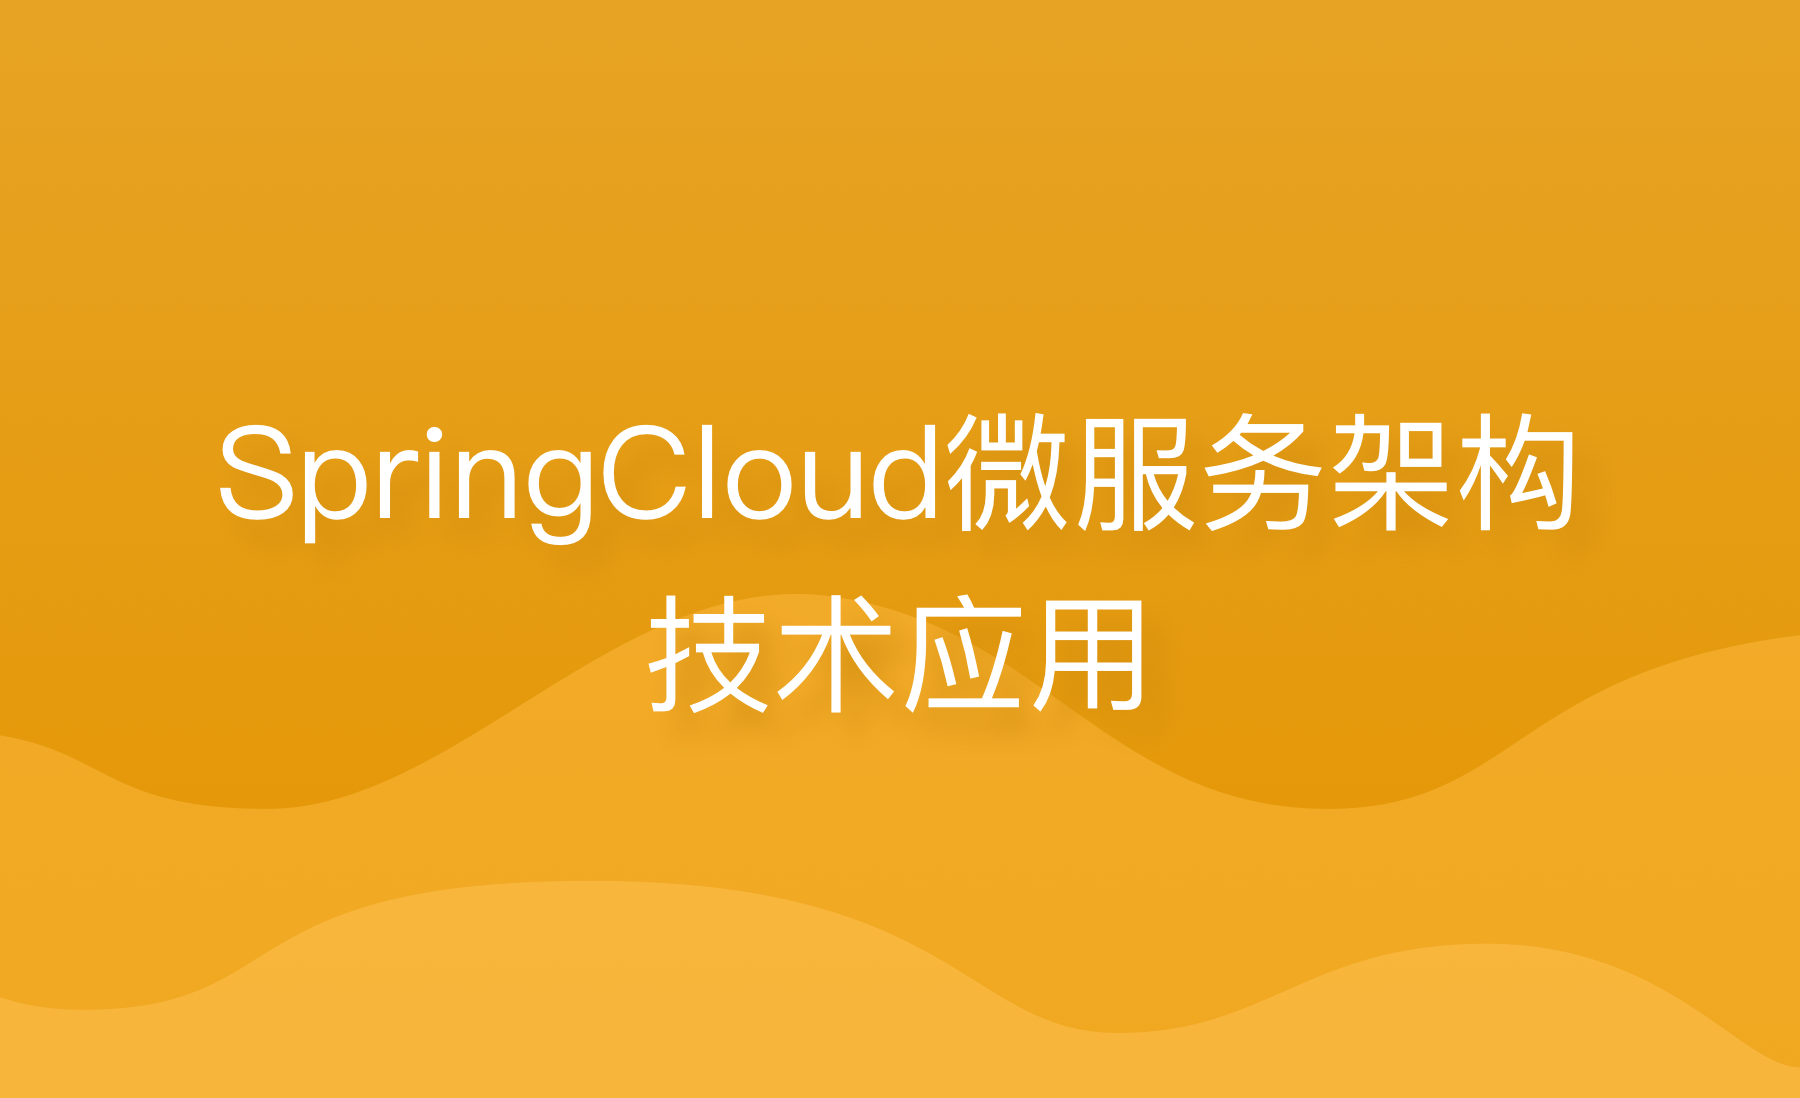 SpringCloud微服务架构技术应用